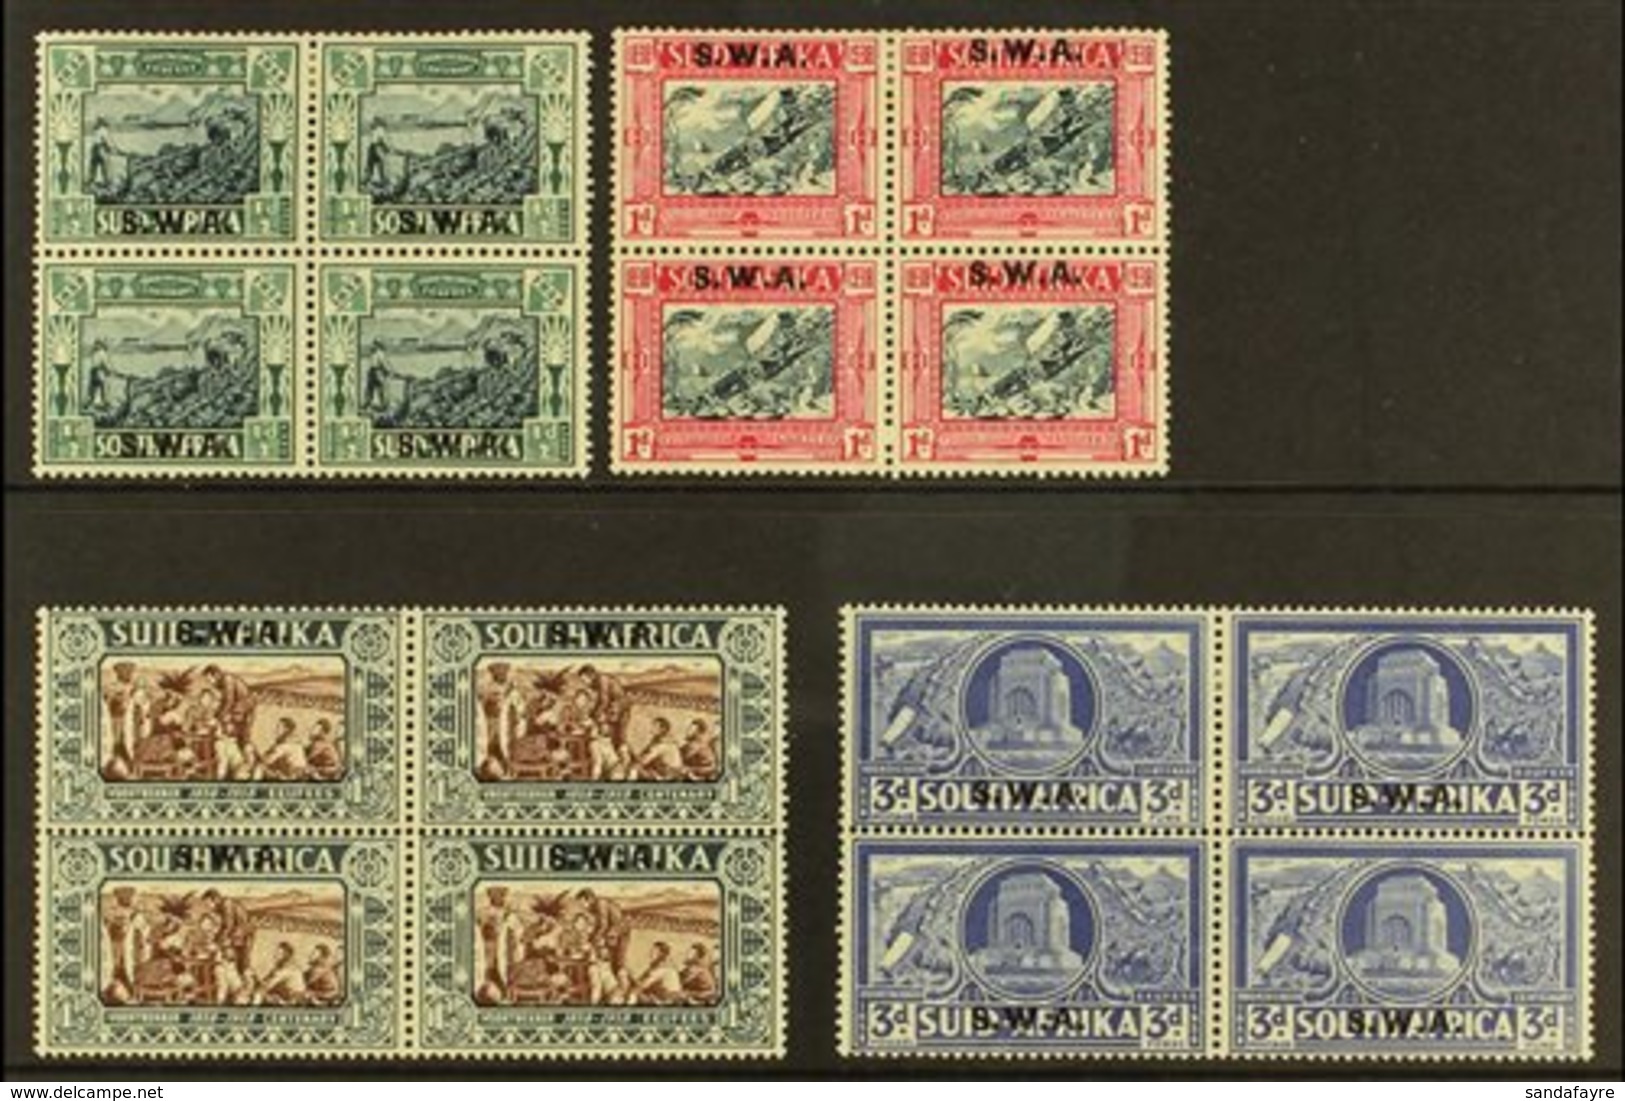 1938 Voortrekker Centenary Memorial Set, SG 105/108 In Fine Mint/NHM Blocks Of 4, The Lower Stamps In Each Block Being N - South West Africa (1923-1990)